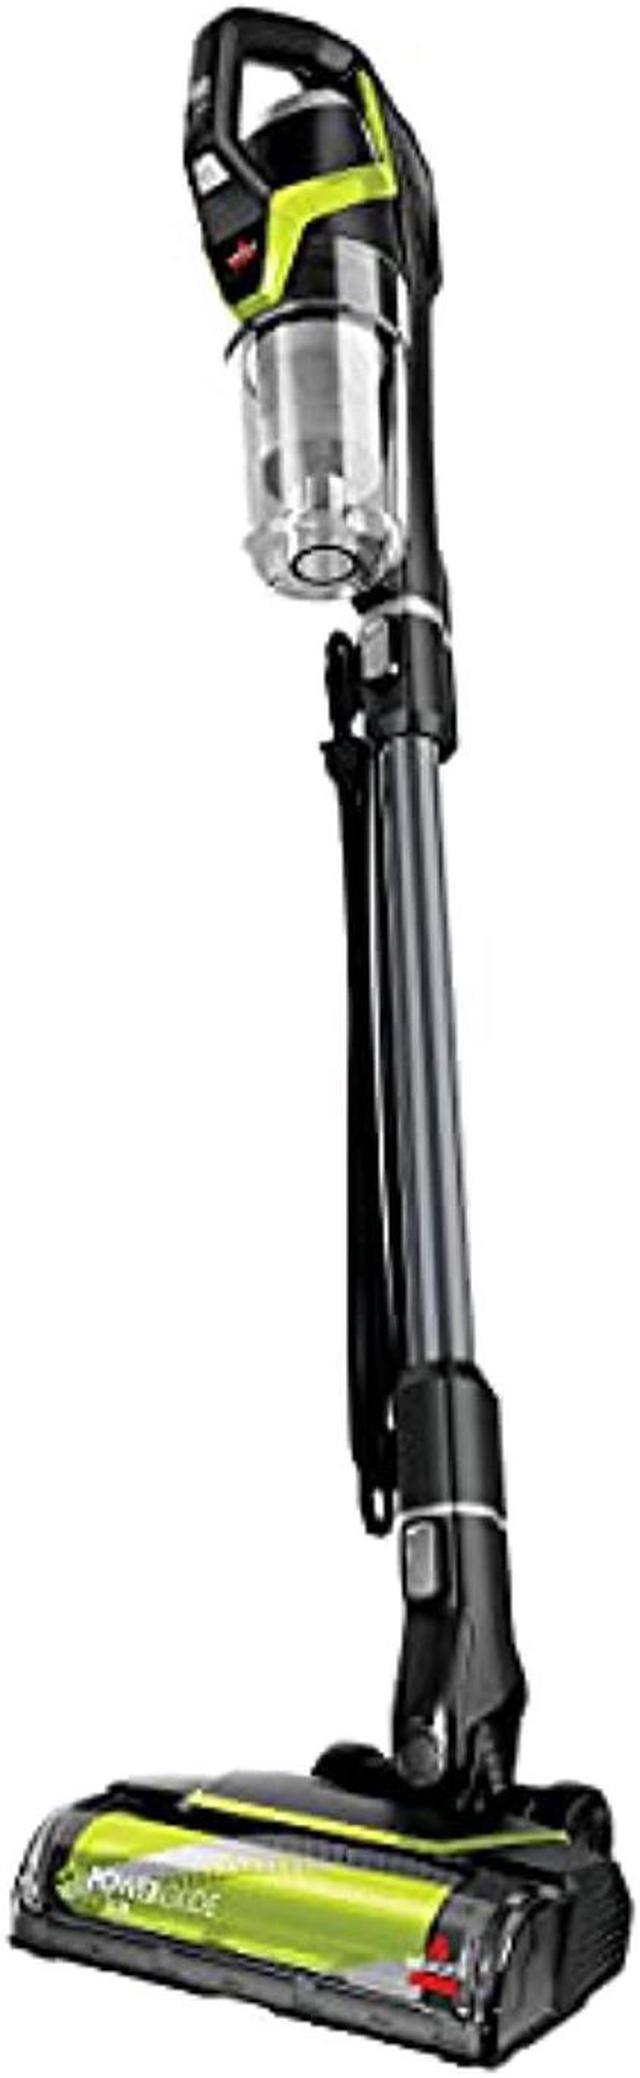 bissell powerglide pet slim corded vacuum, 3070 - Newegg.com